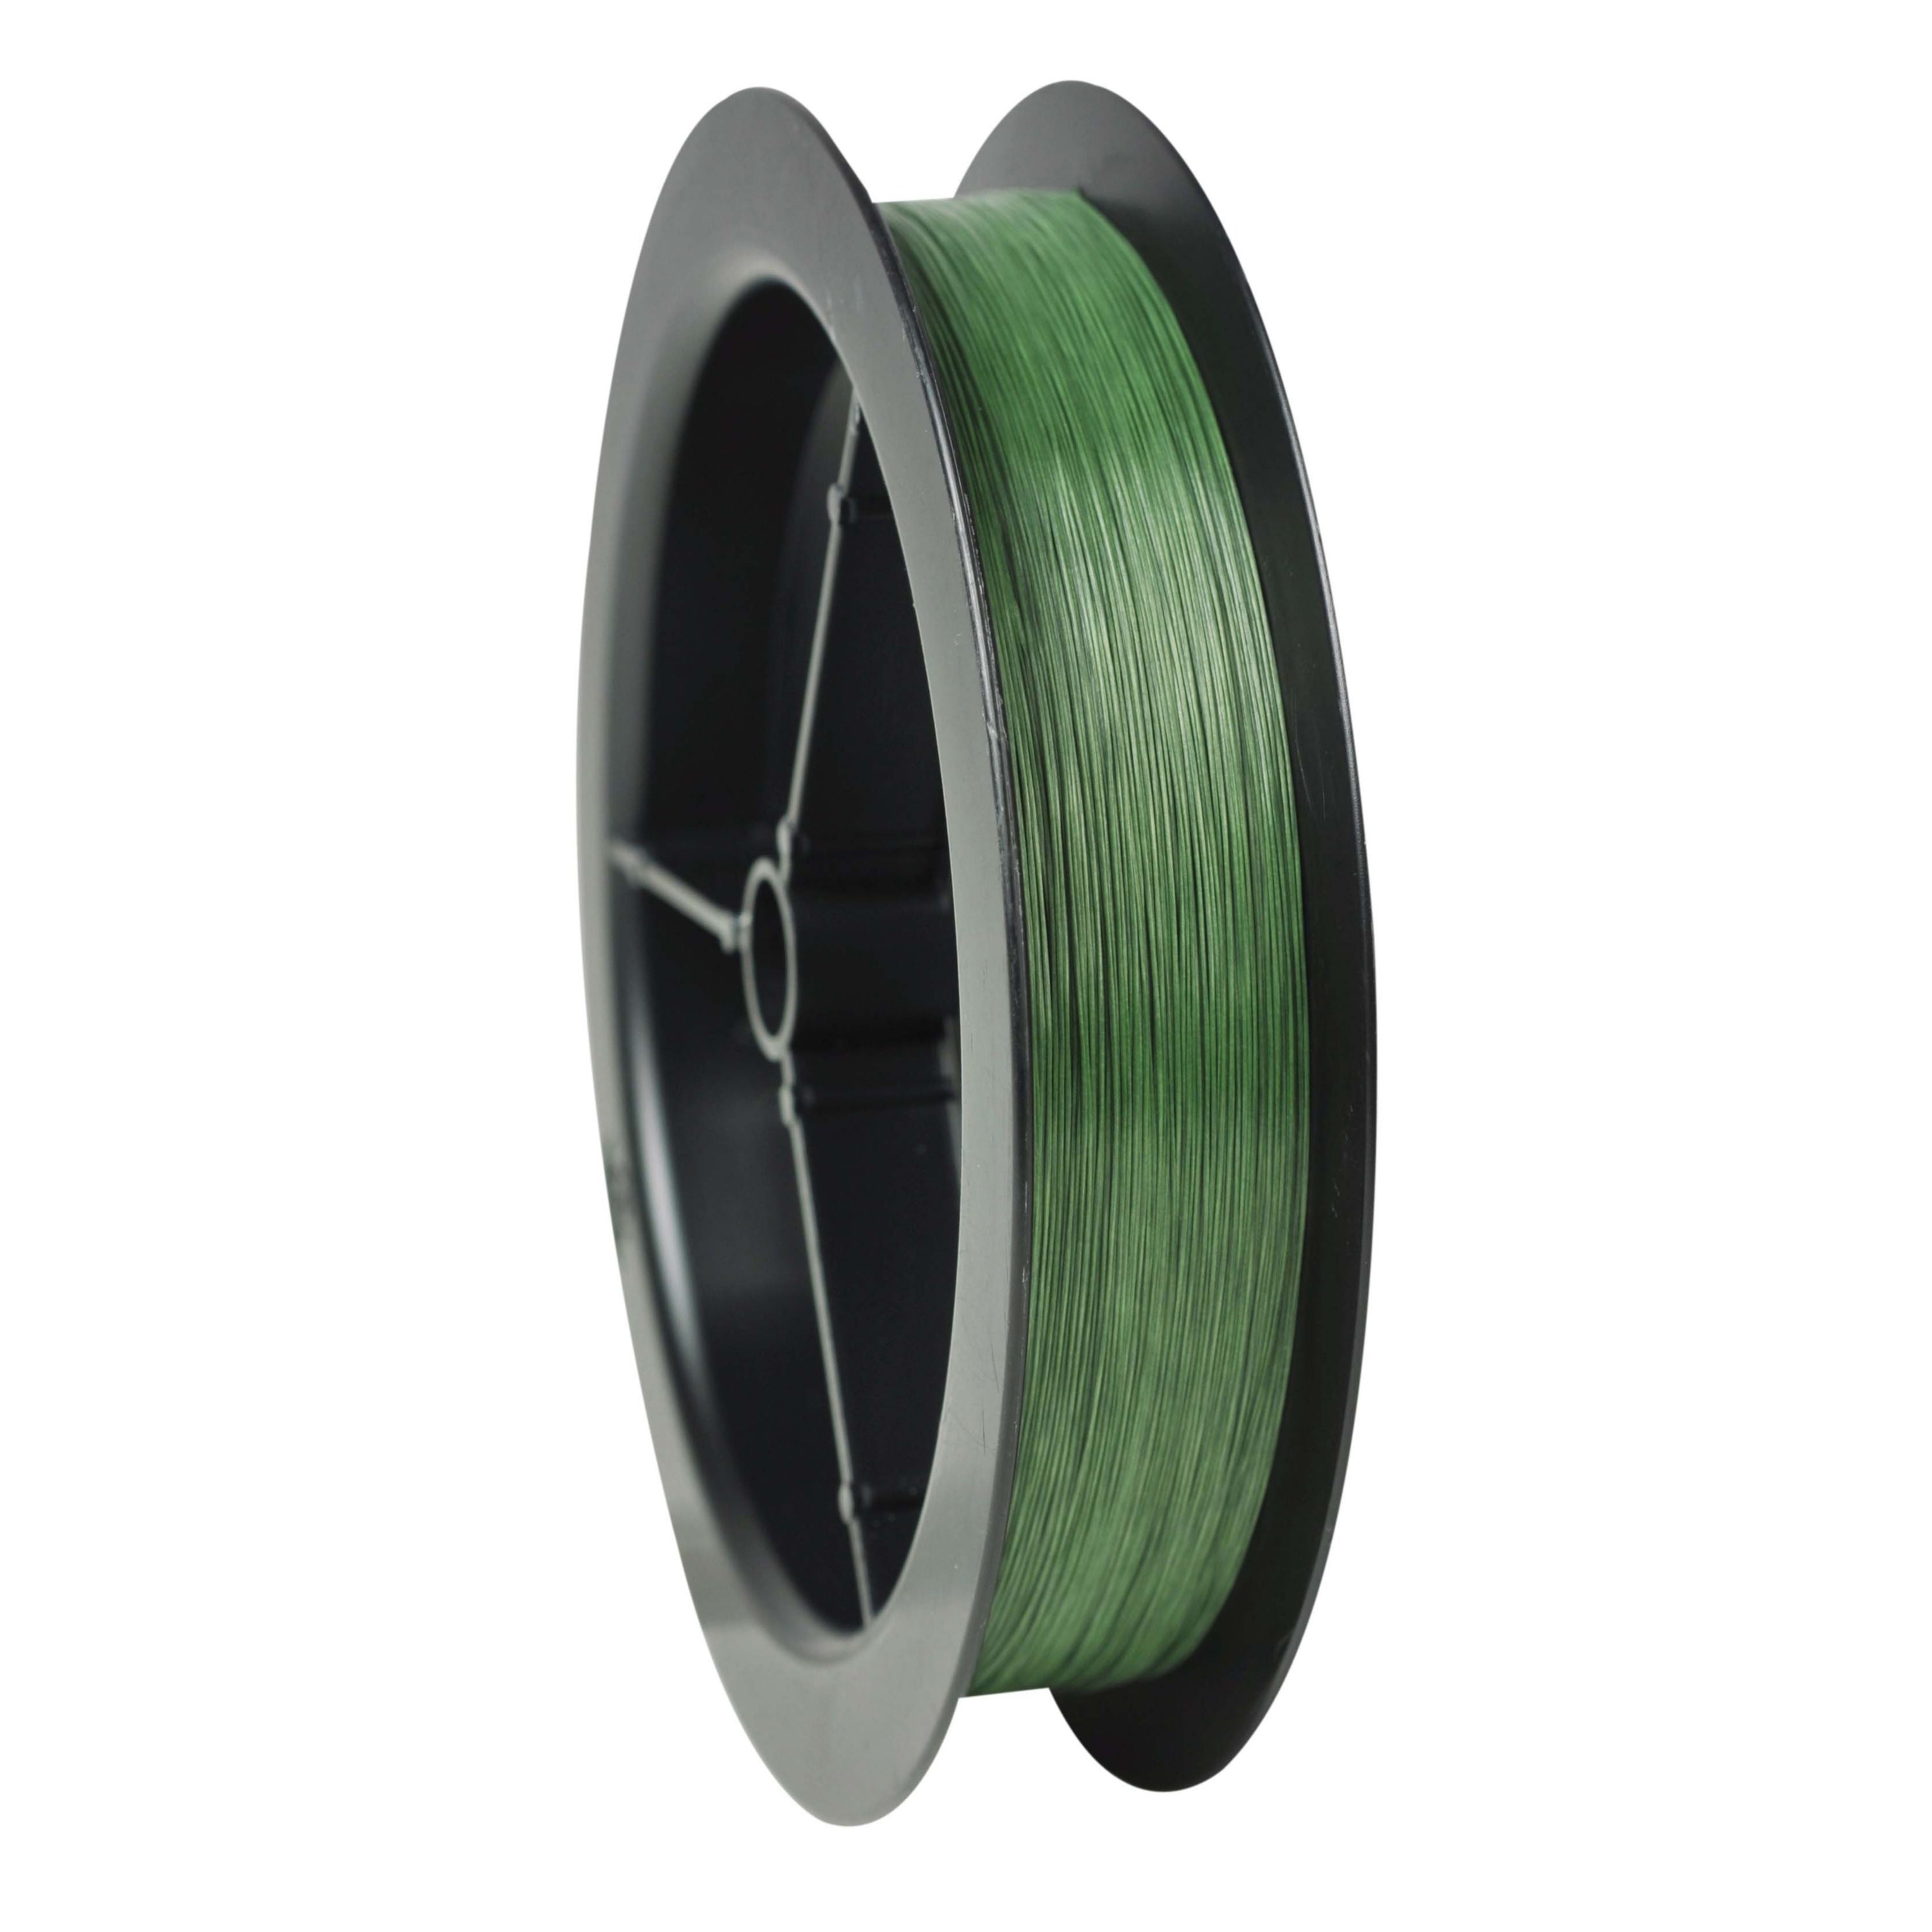 Spiderwire EZ Mono Fishing Line (220 yds) - 6 lb Test - Low-Vis Green